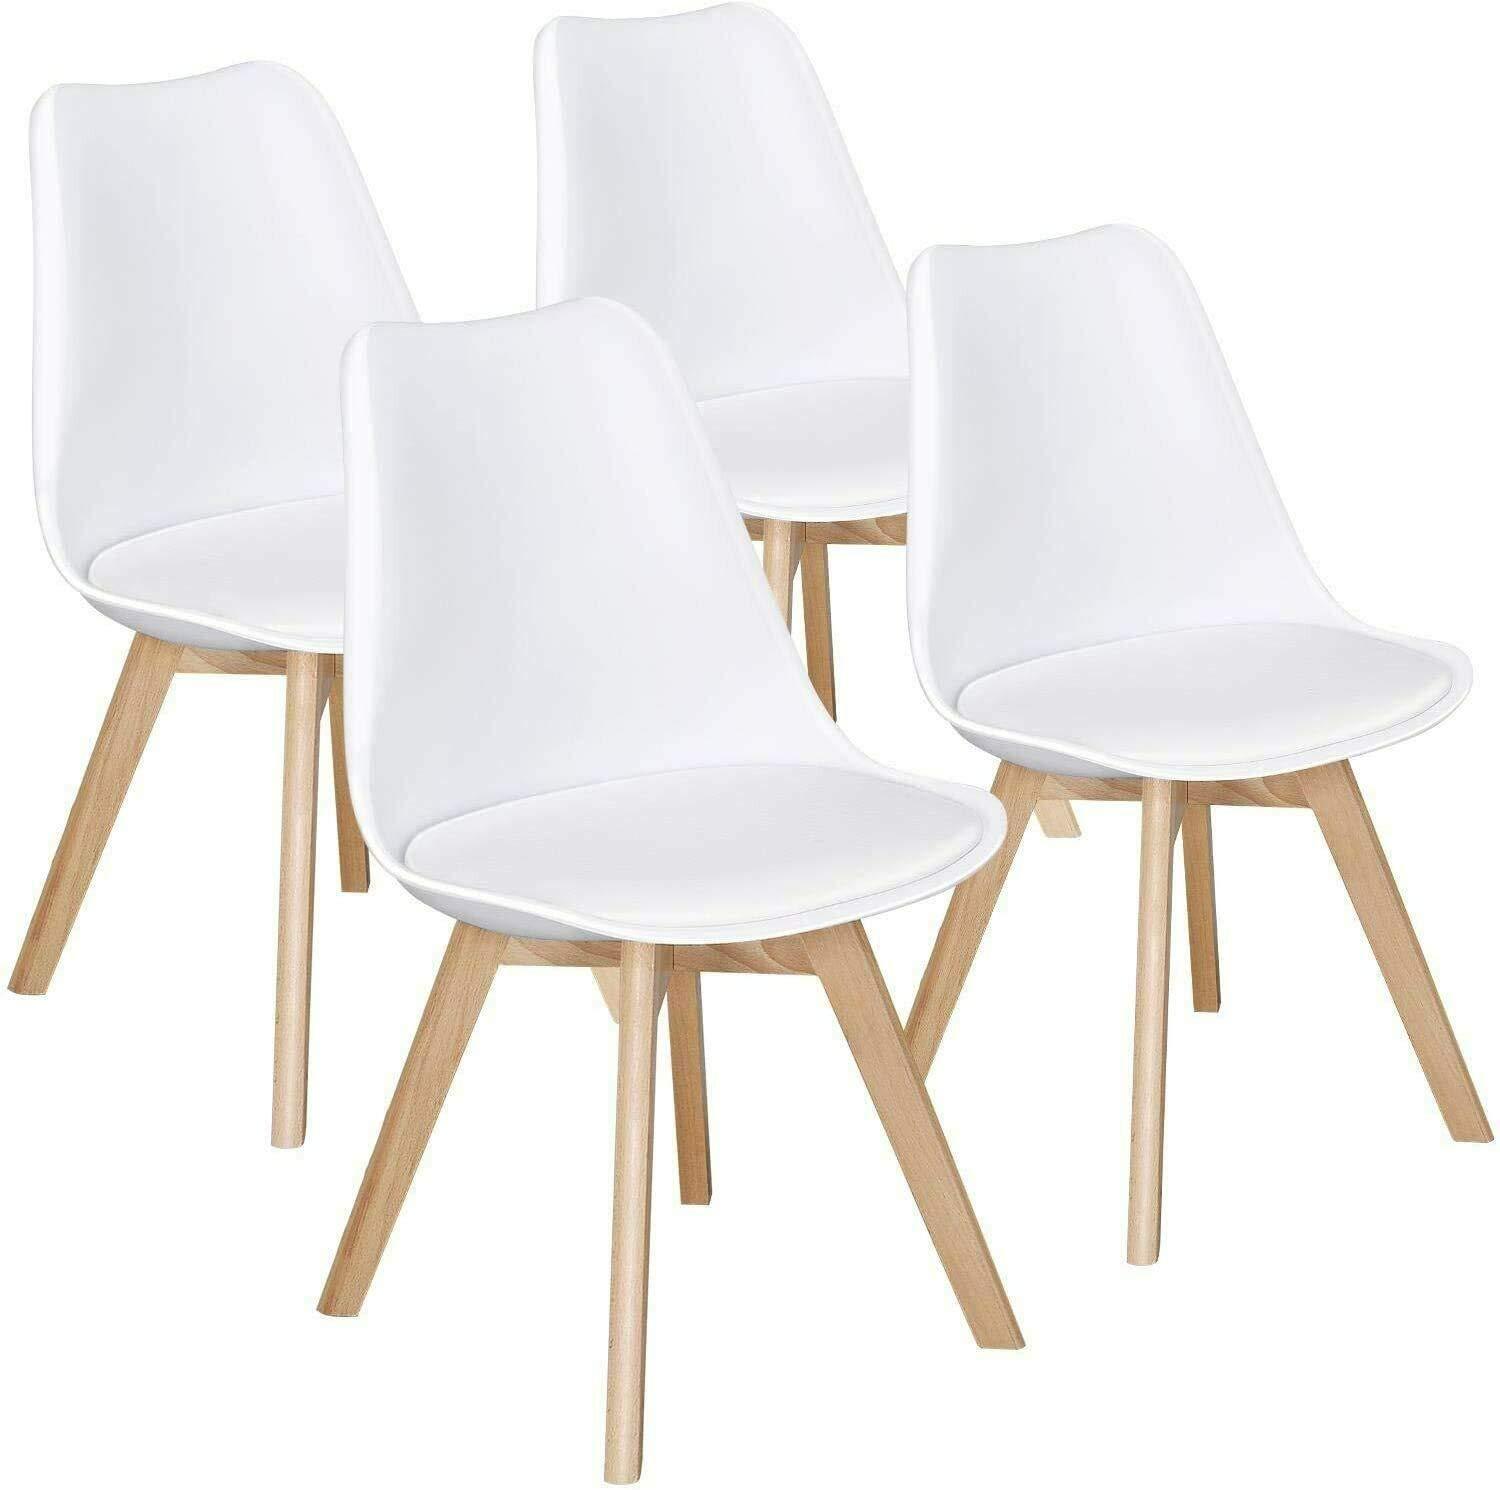 KOSY KOALA White Wood Style rectangular wooden Dining Table and 4 Chairs Set